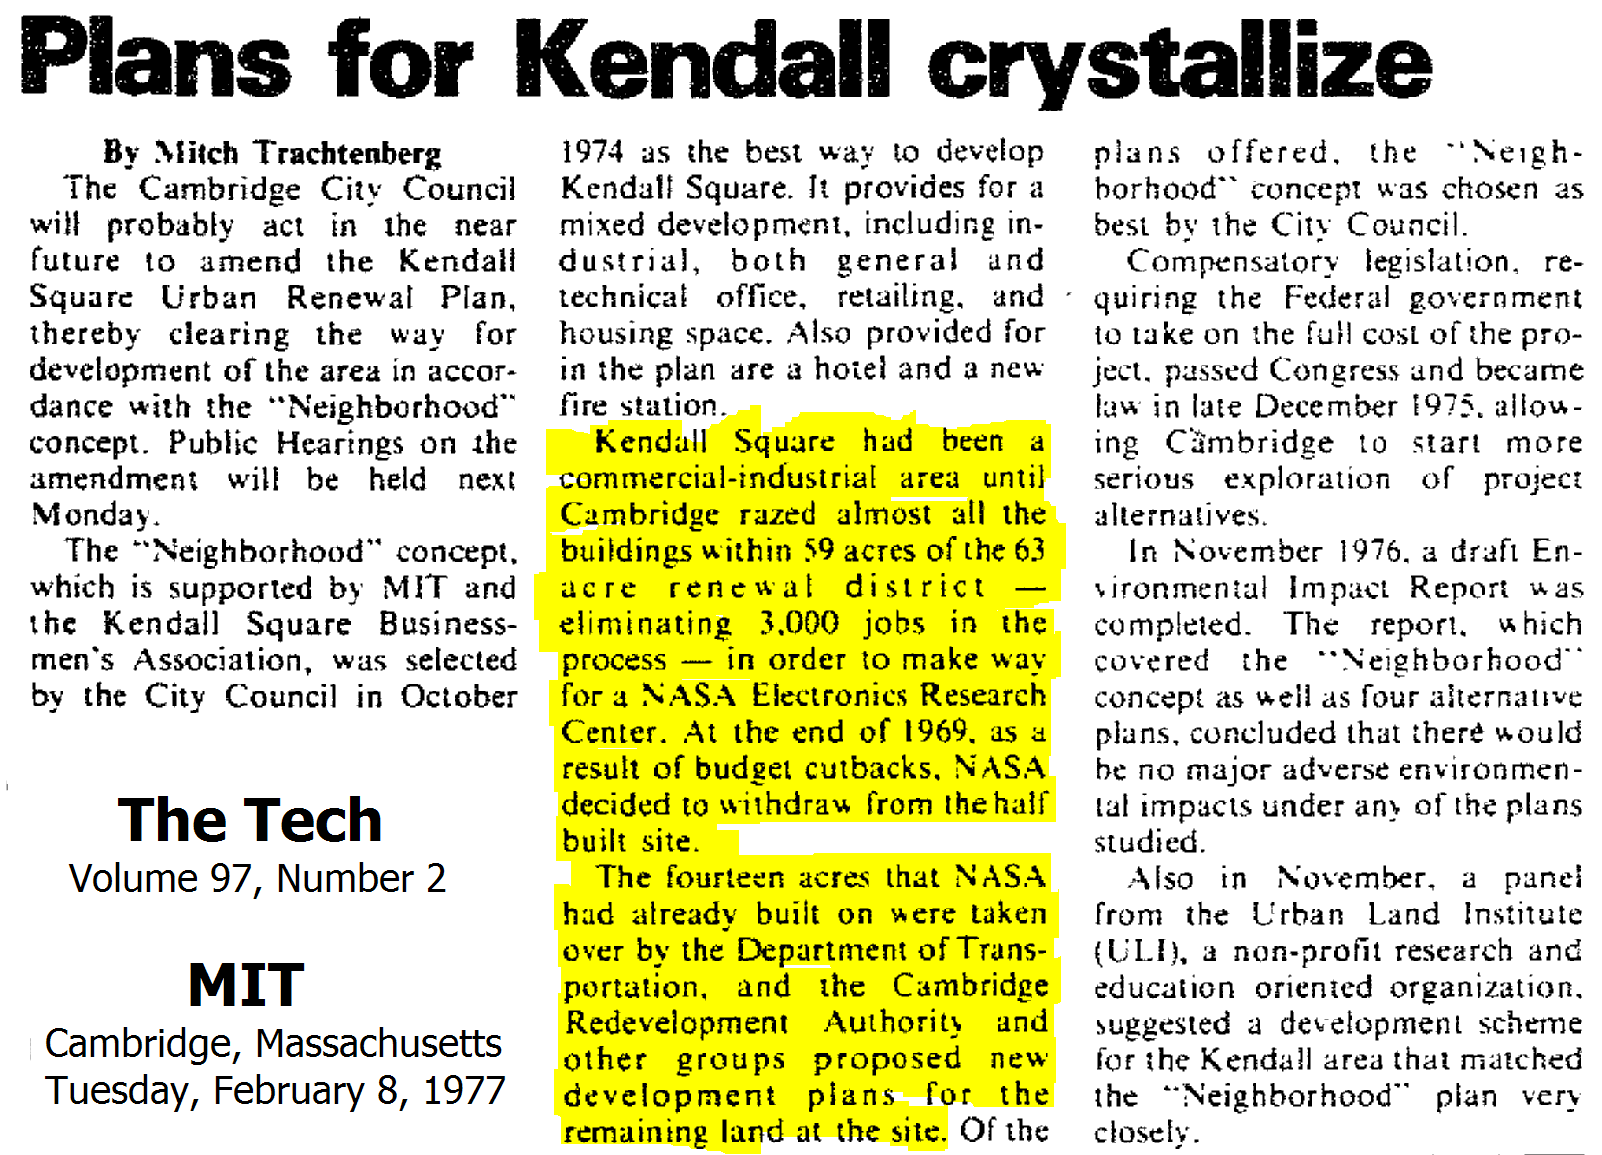 The Tech Feb 8 1977